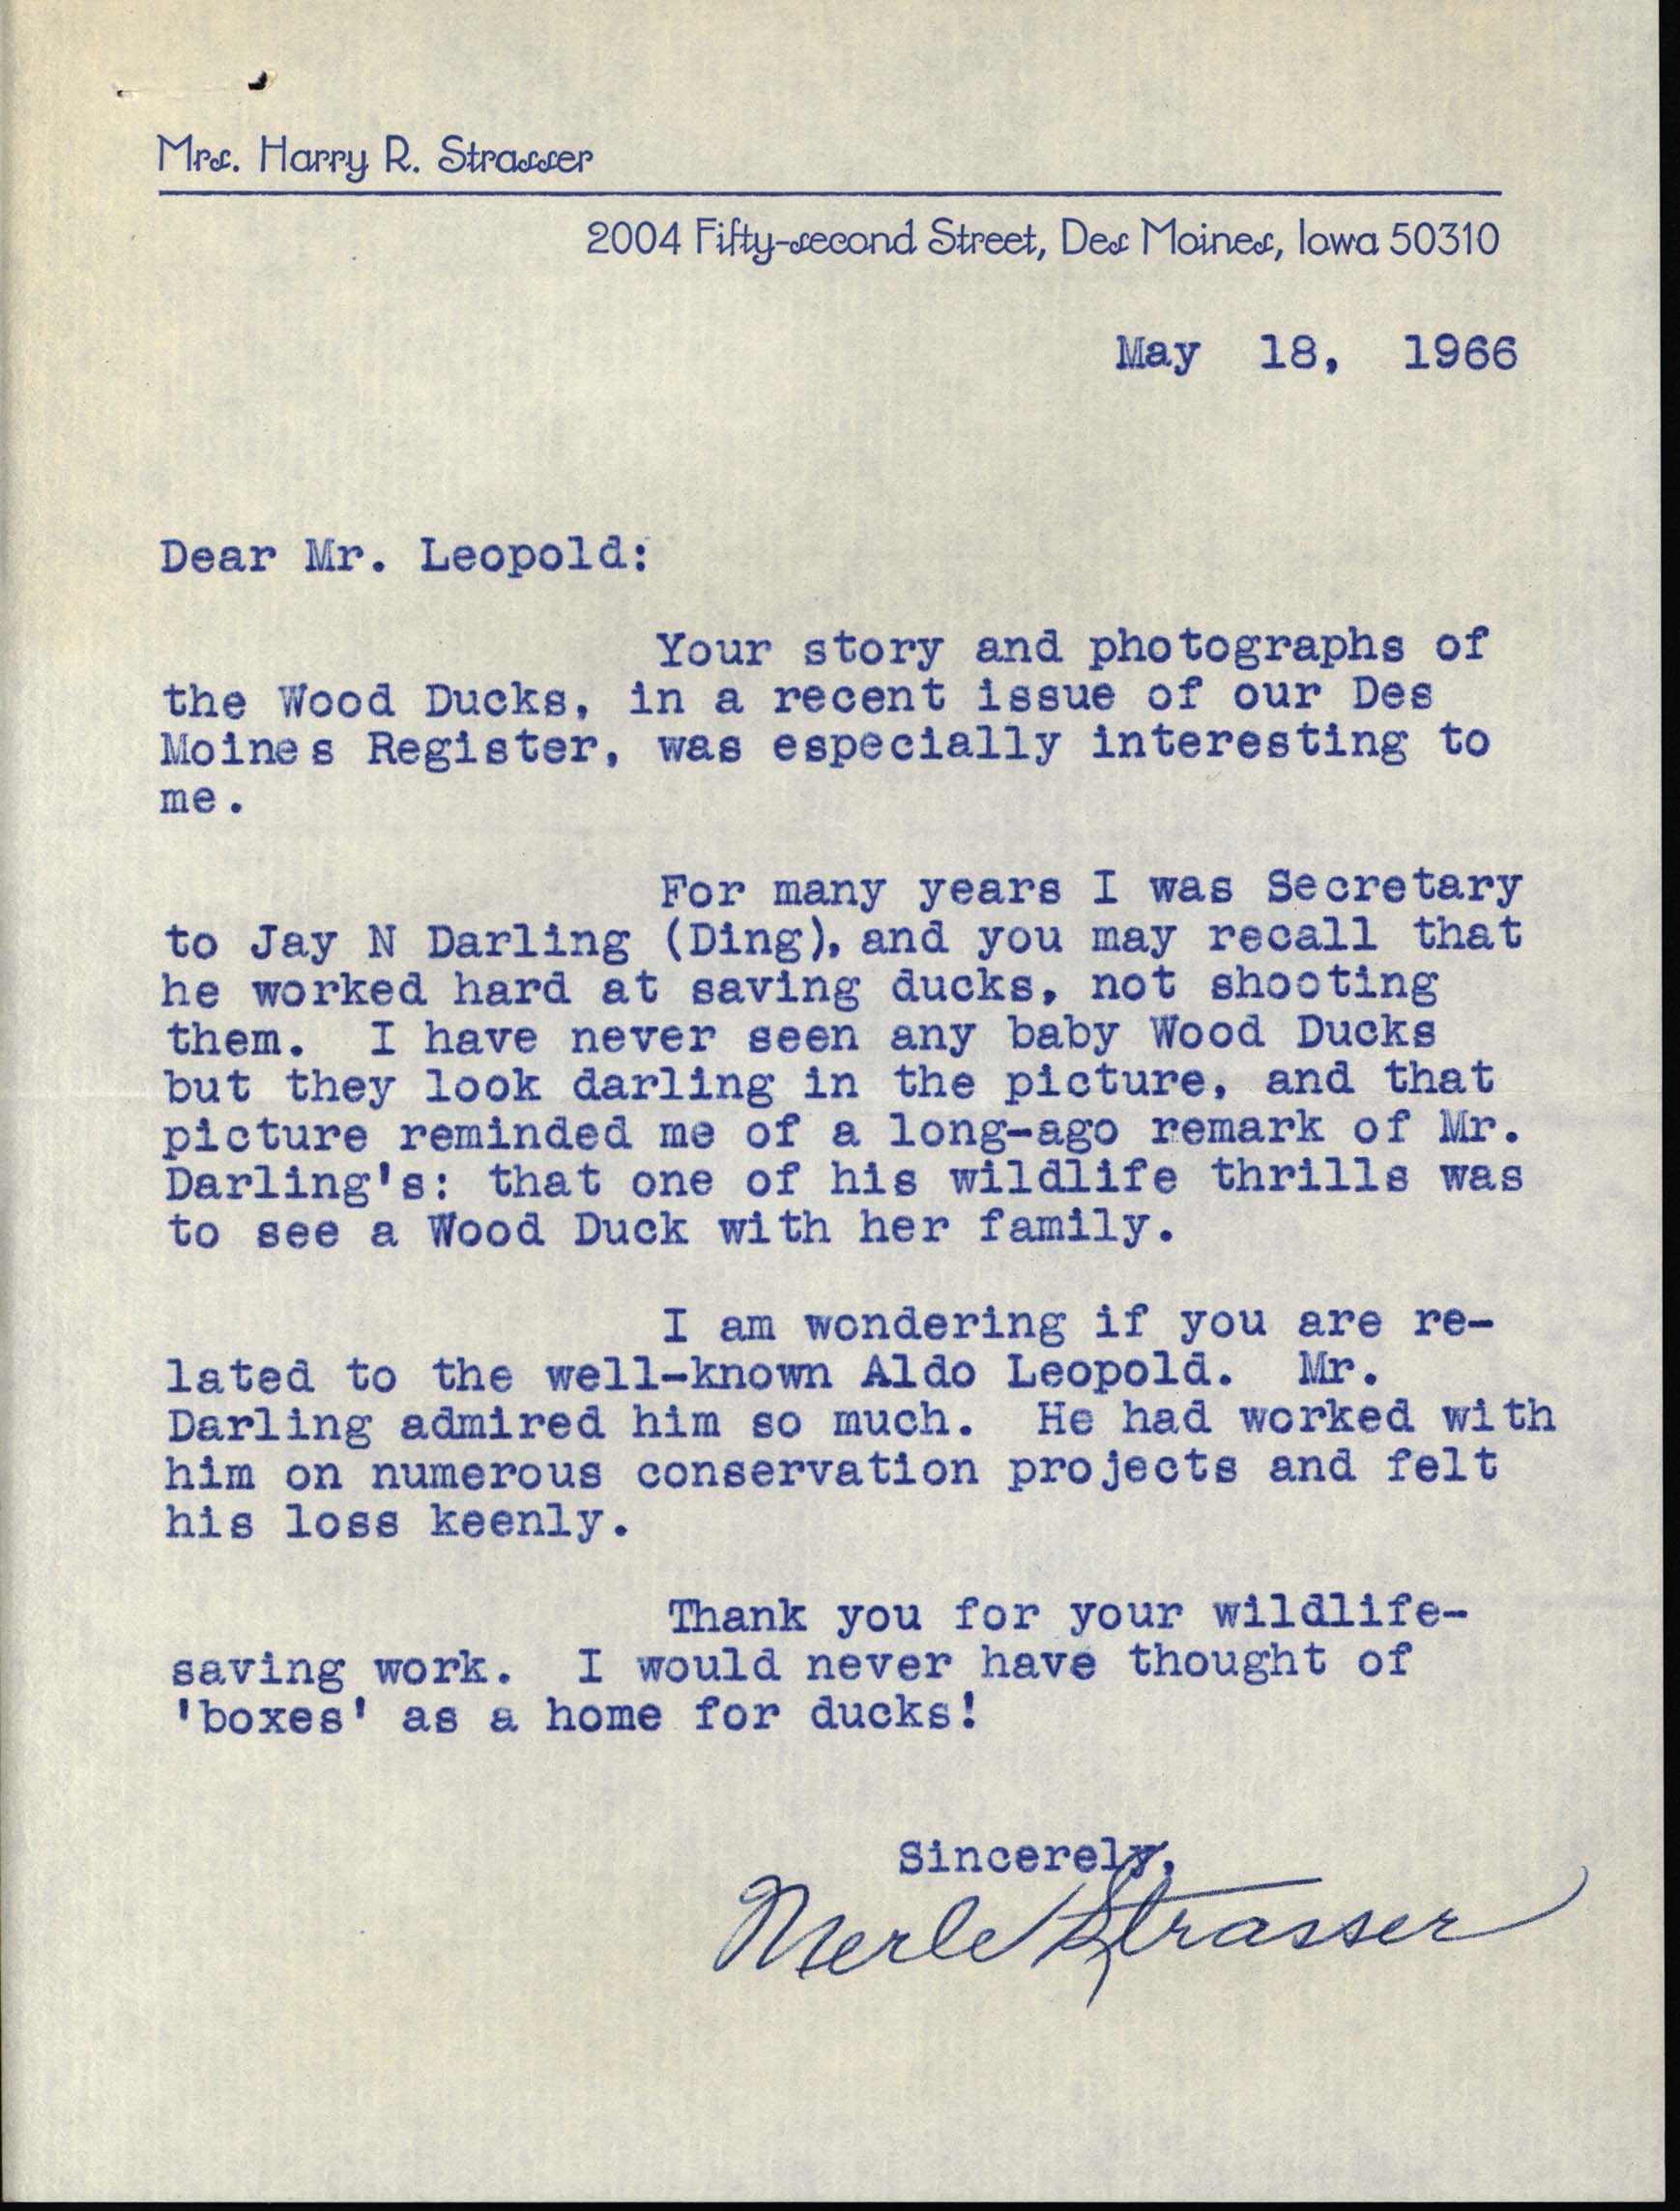 Merle Strasser letter to Frederic Leopold regarding Wood Ducks, May 18, 1966